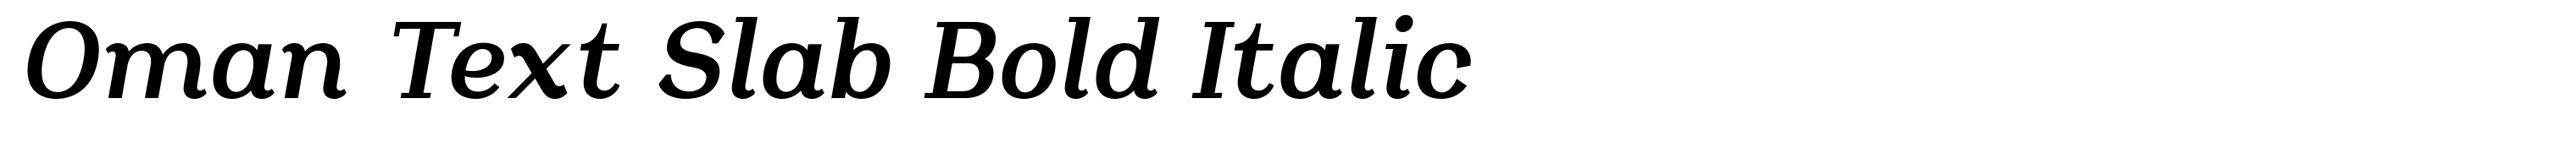 Oman Text Slab Bold Italic